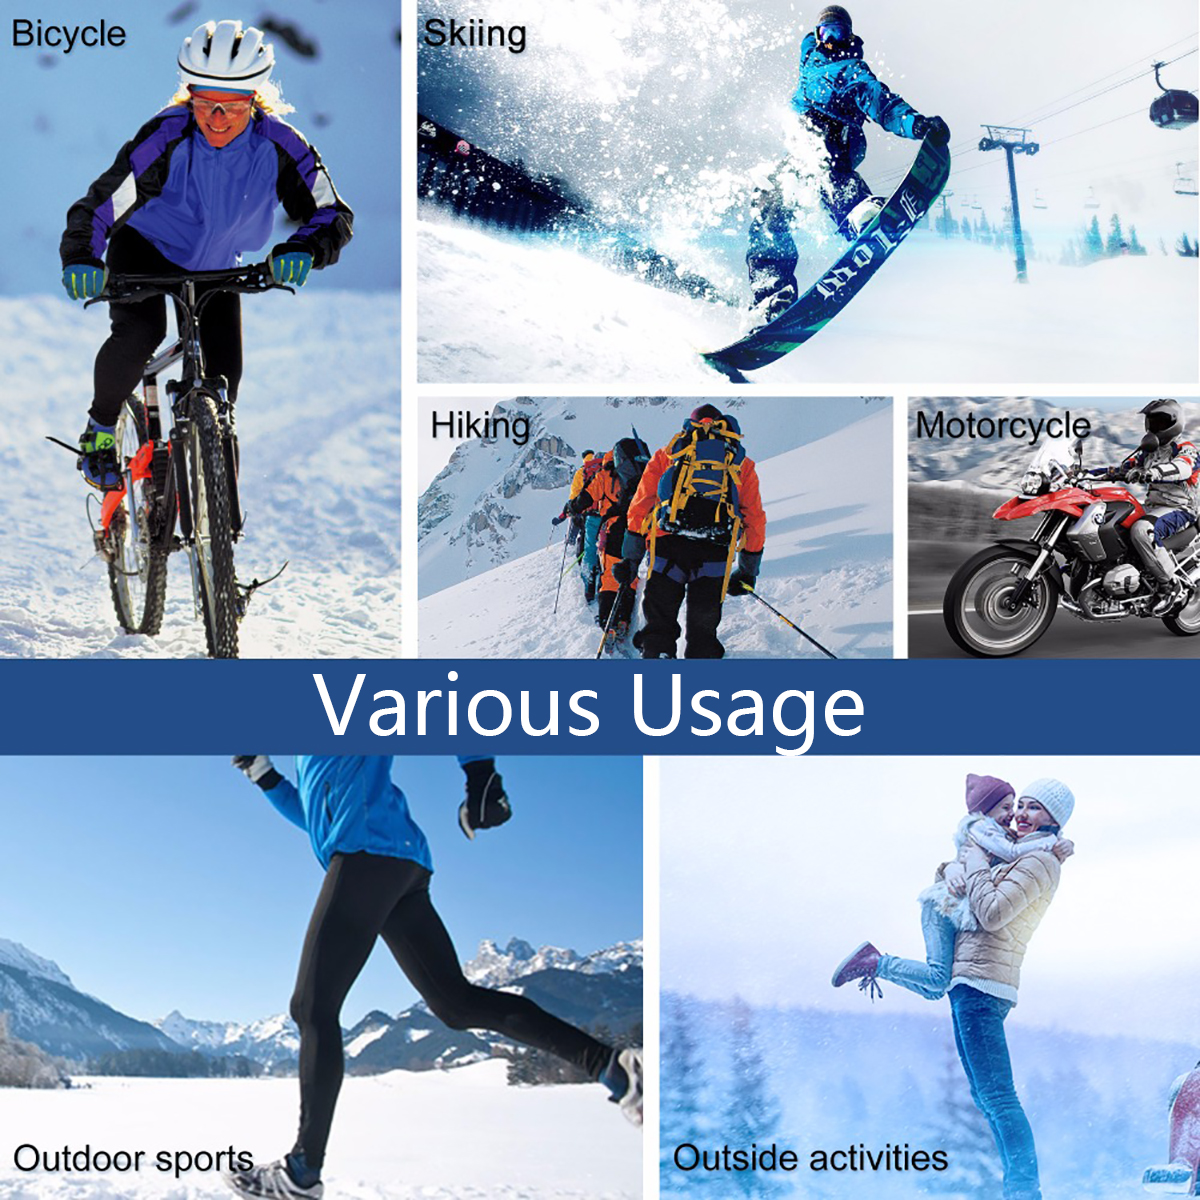 Cotton-Electric-Rechargeable-Battery-Heated-Socks-Winter-Cycling-Ski-Warmer-Feet-Socks-1416499